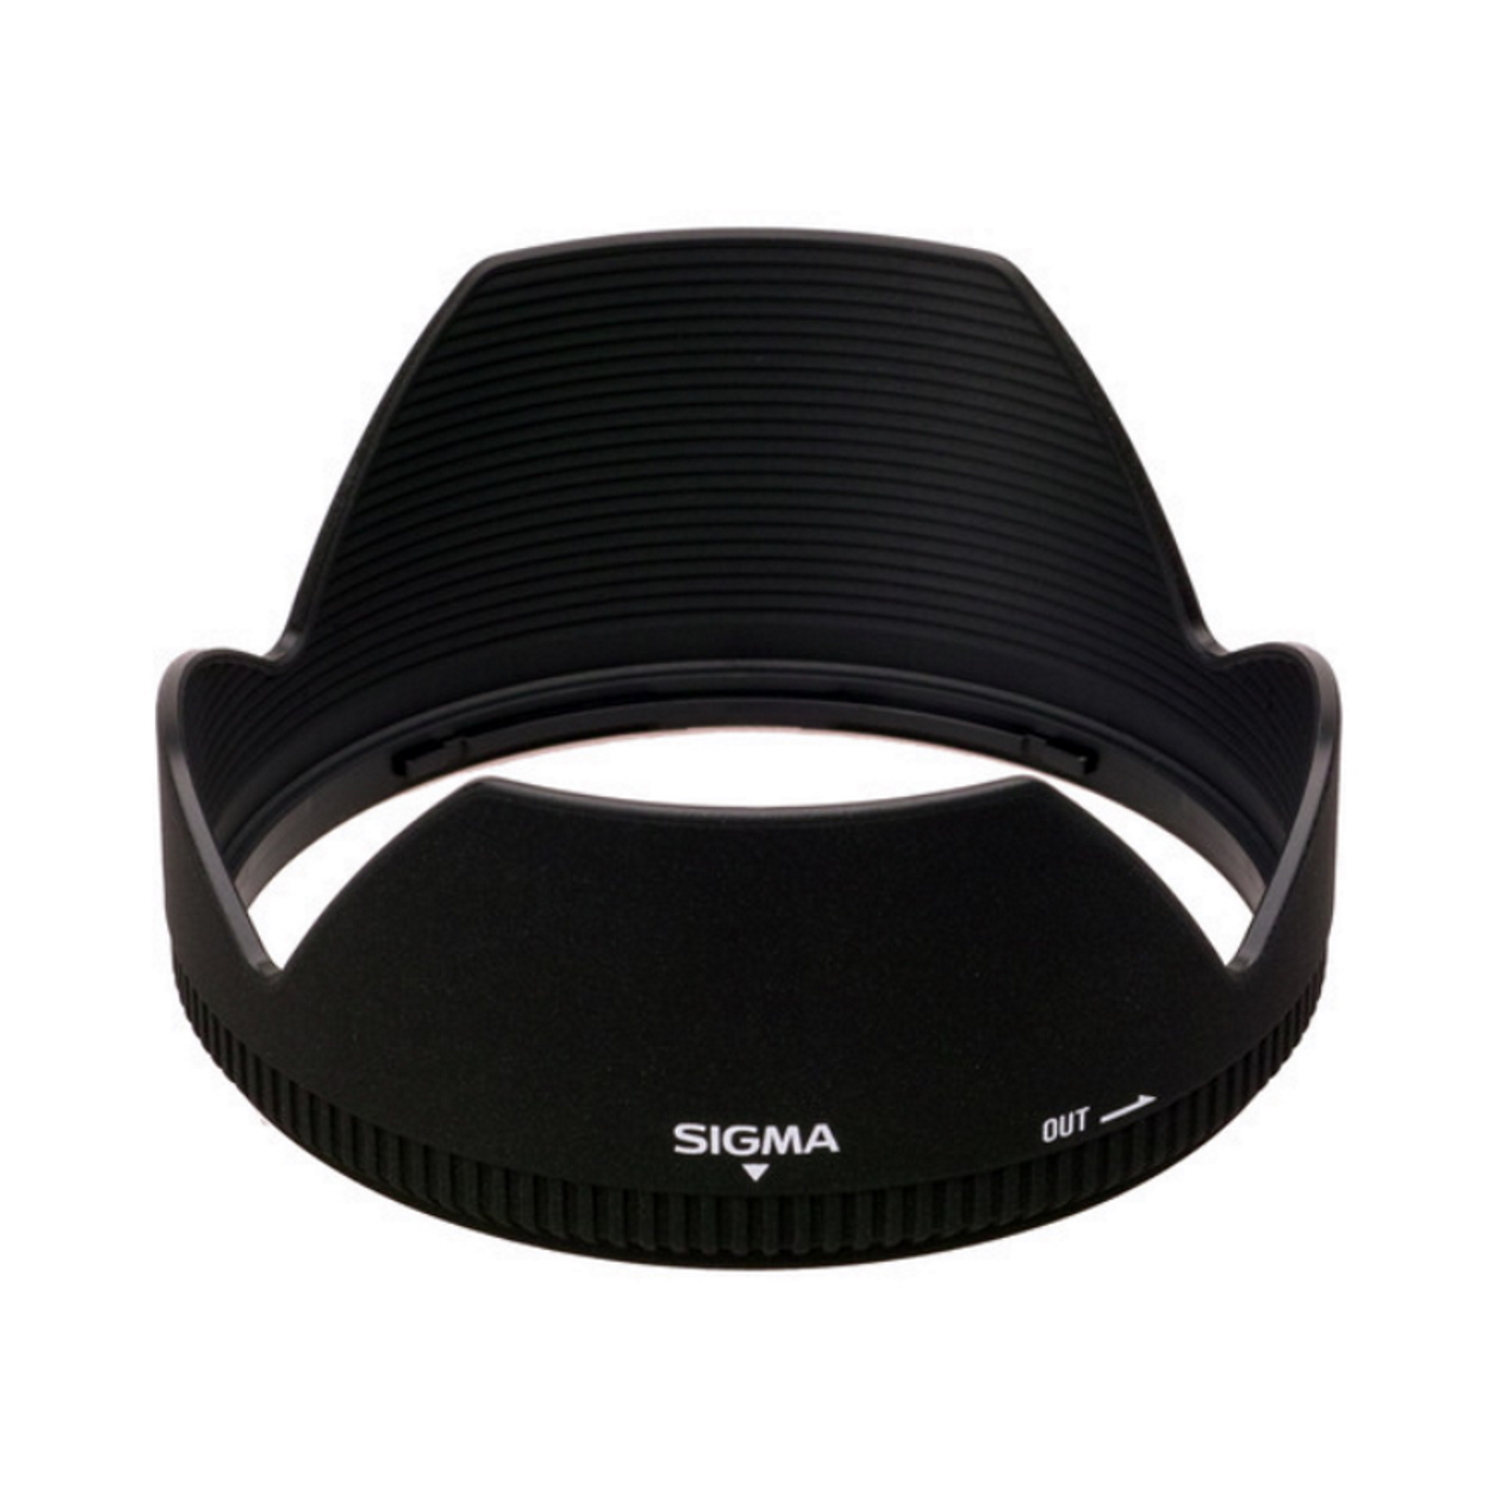 Sigma LH876-01 Lens Hood for 24-70mm f/2.8 IF EX DG HSM